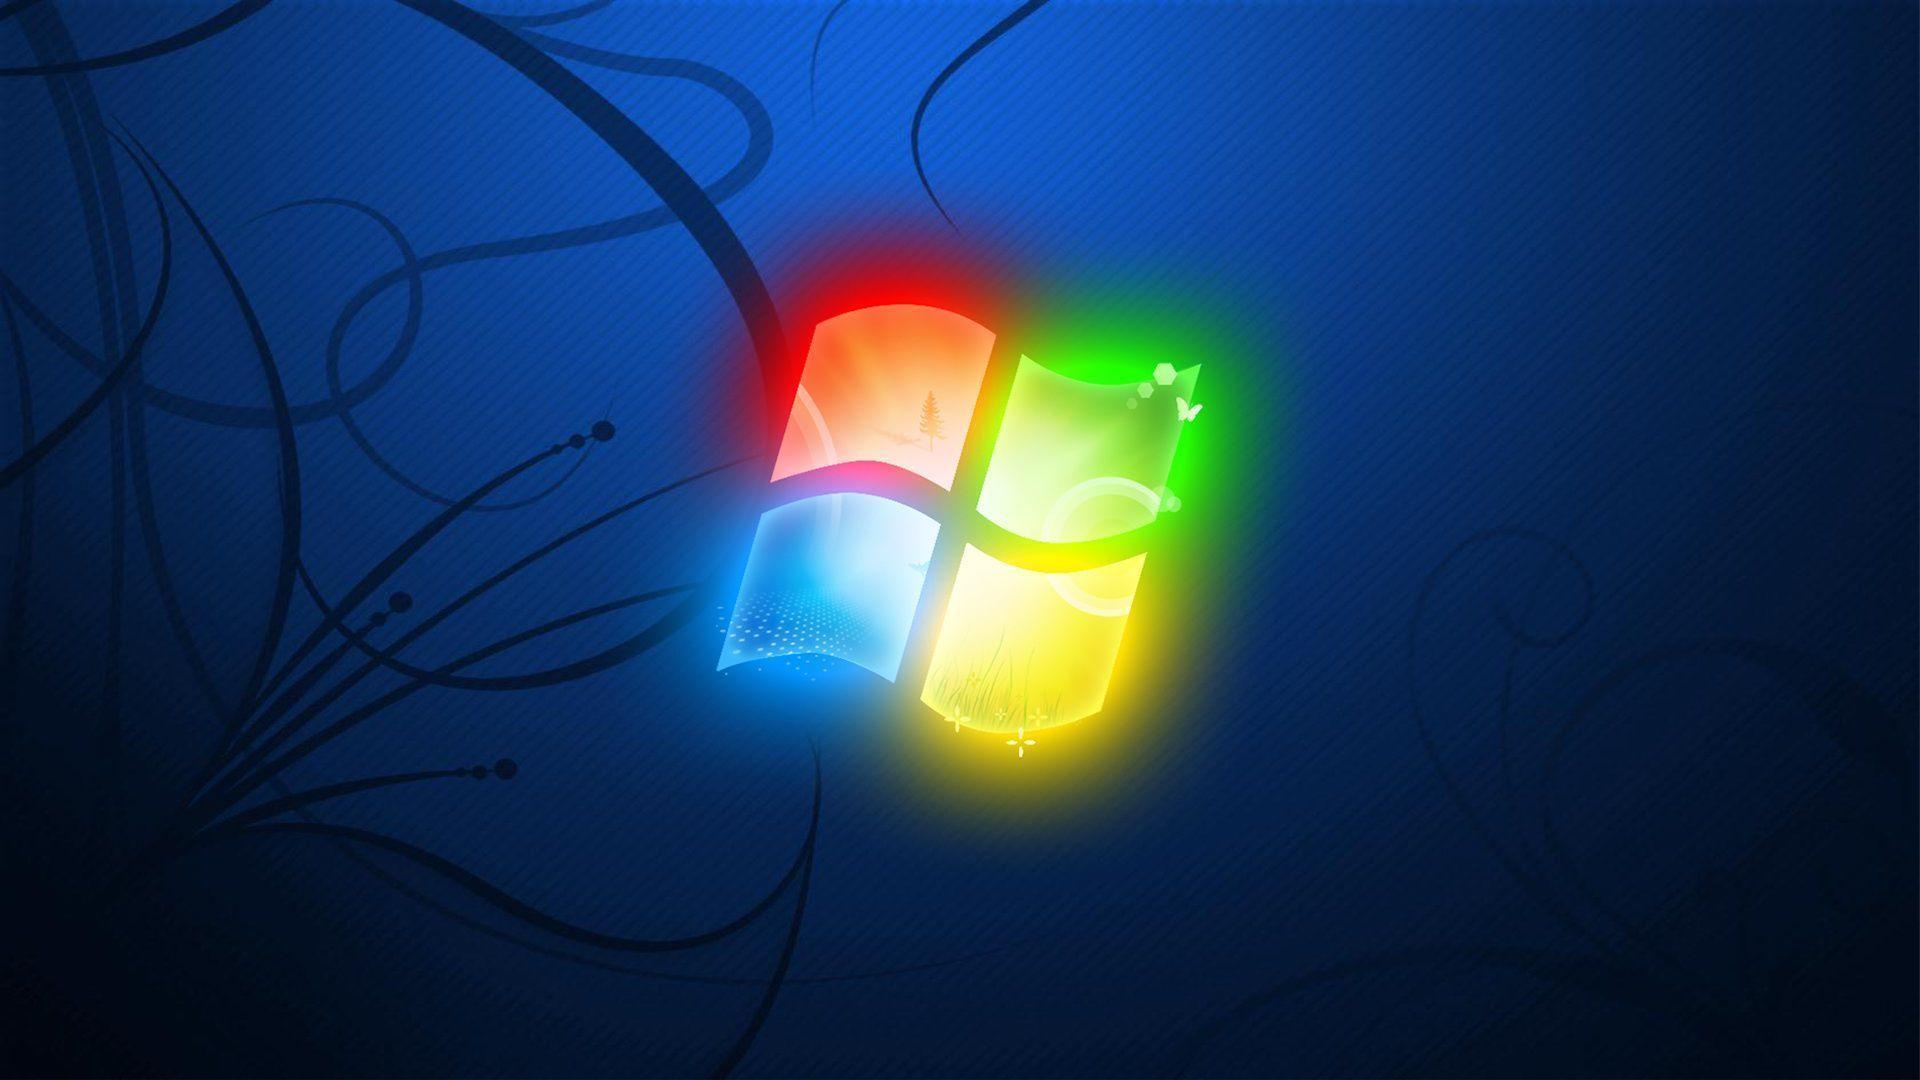 Windows HD Backgrounds - Wallpaper Cave